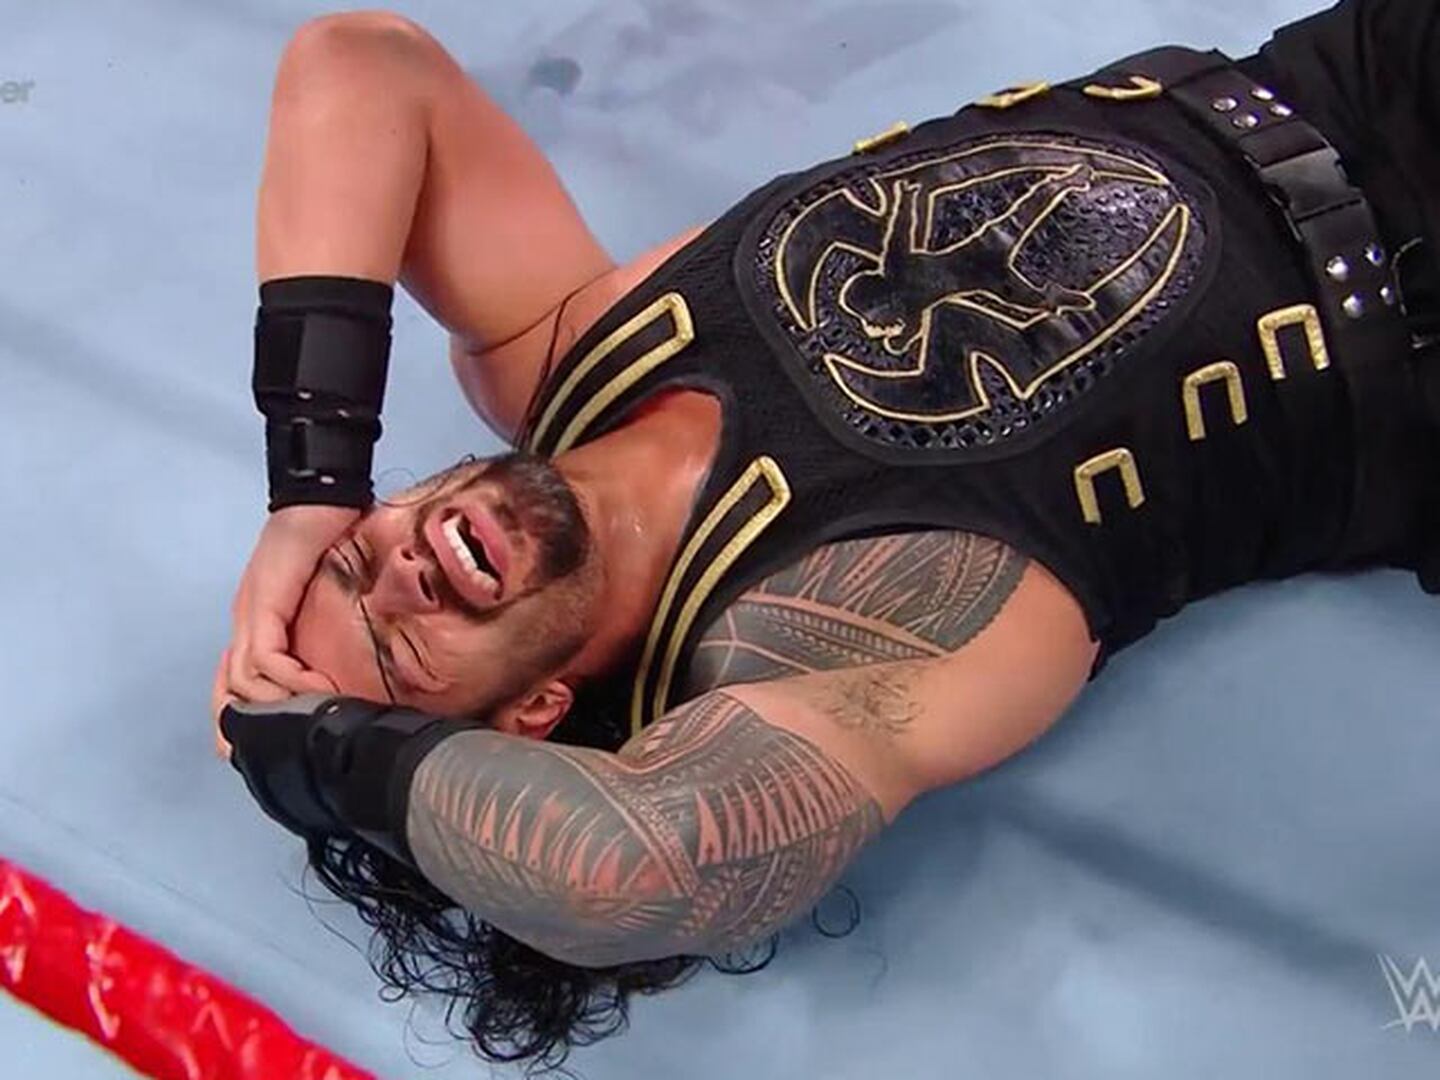 Roman Reigns venció en Elimination Chamber y enfrentará a Brock Lesnar en Wrestlemania 34